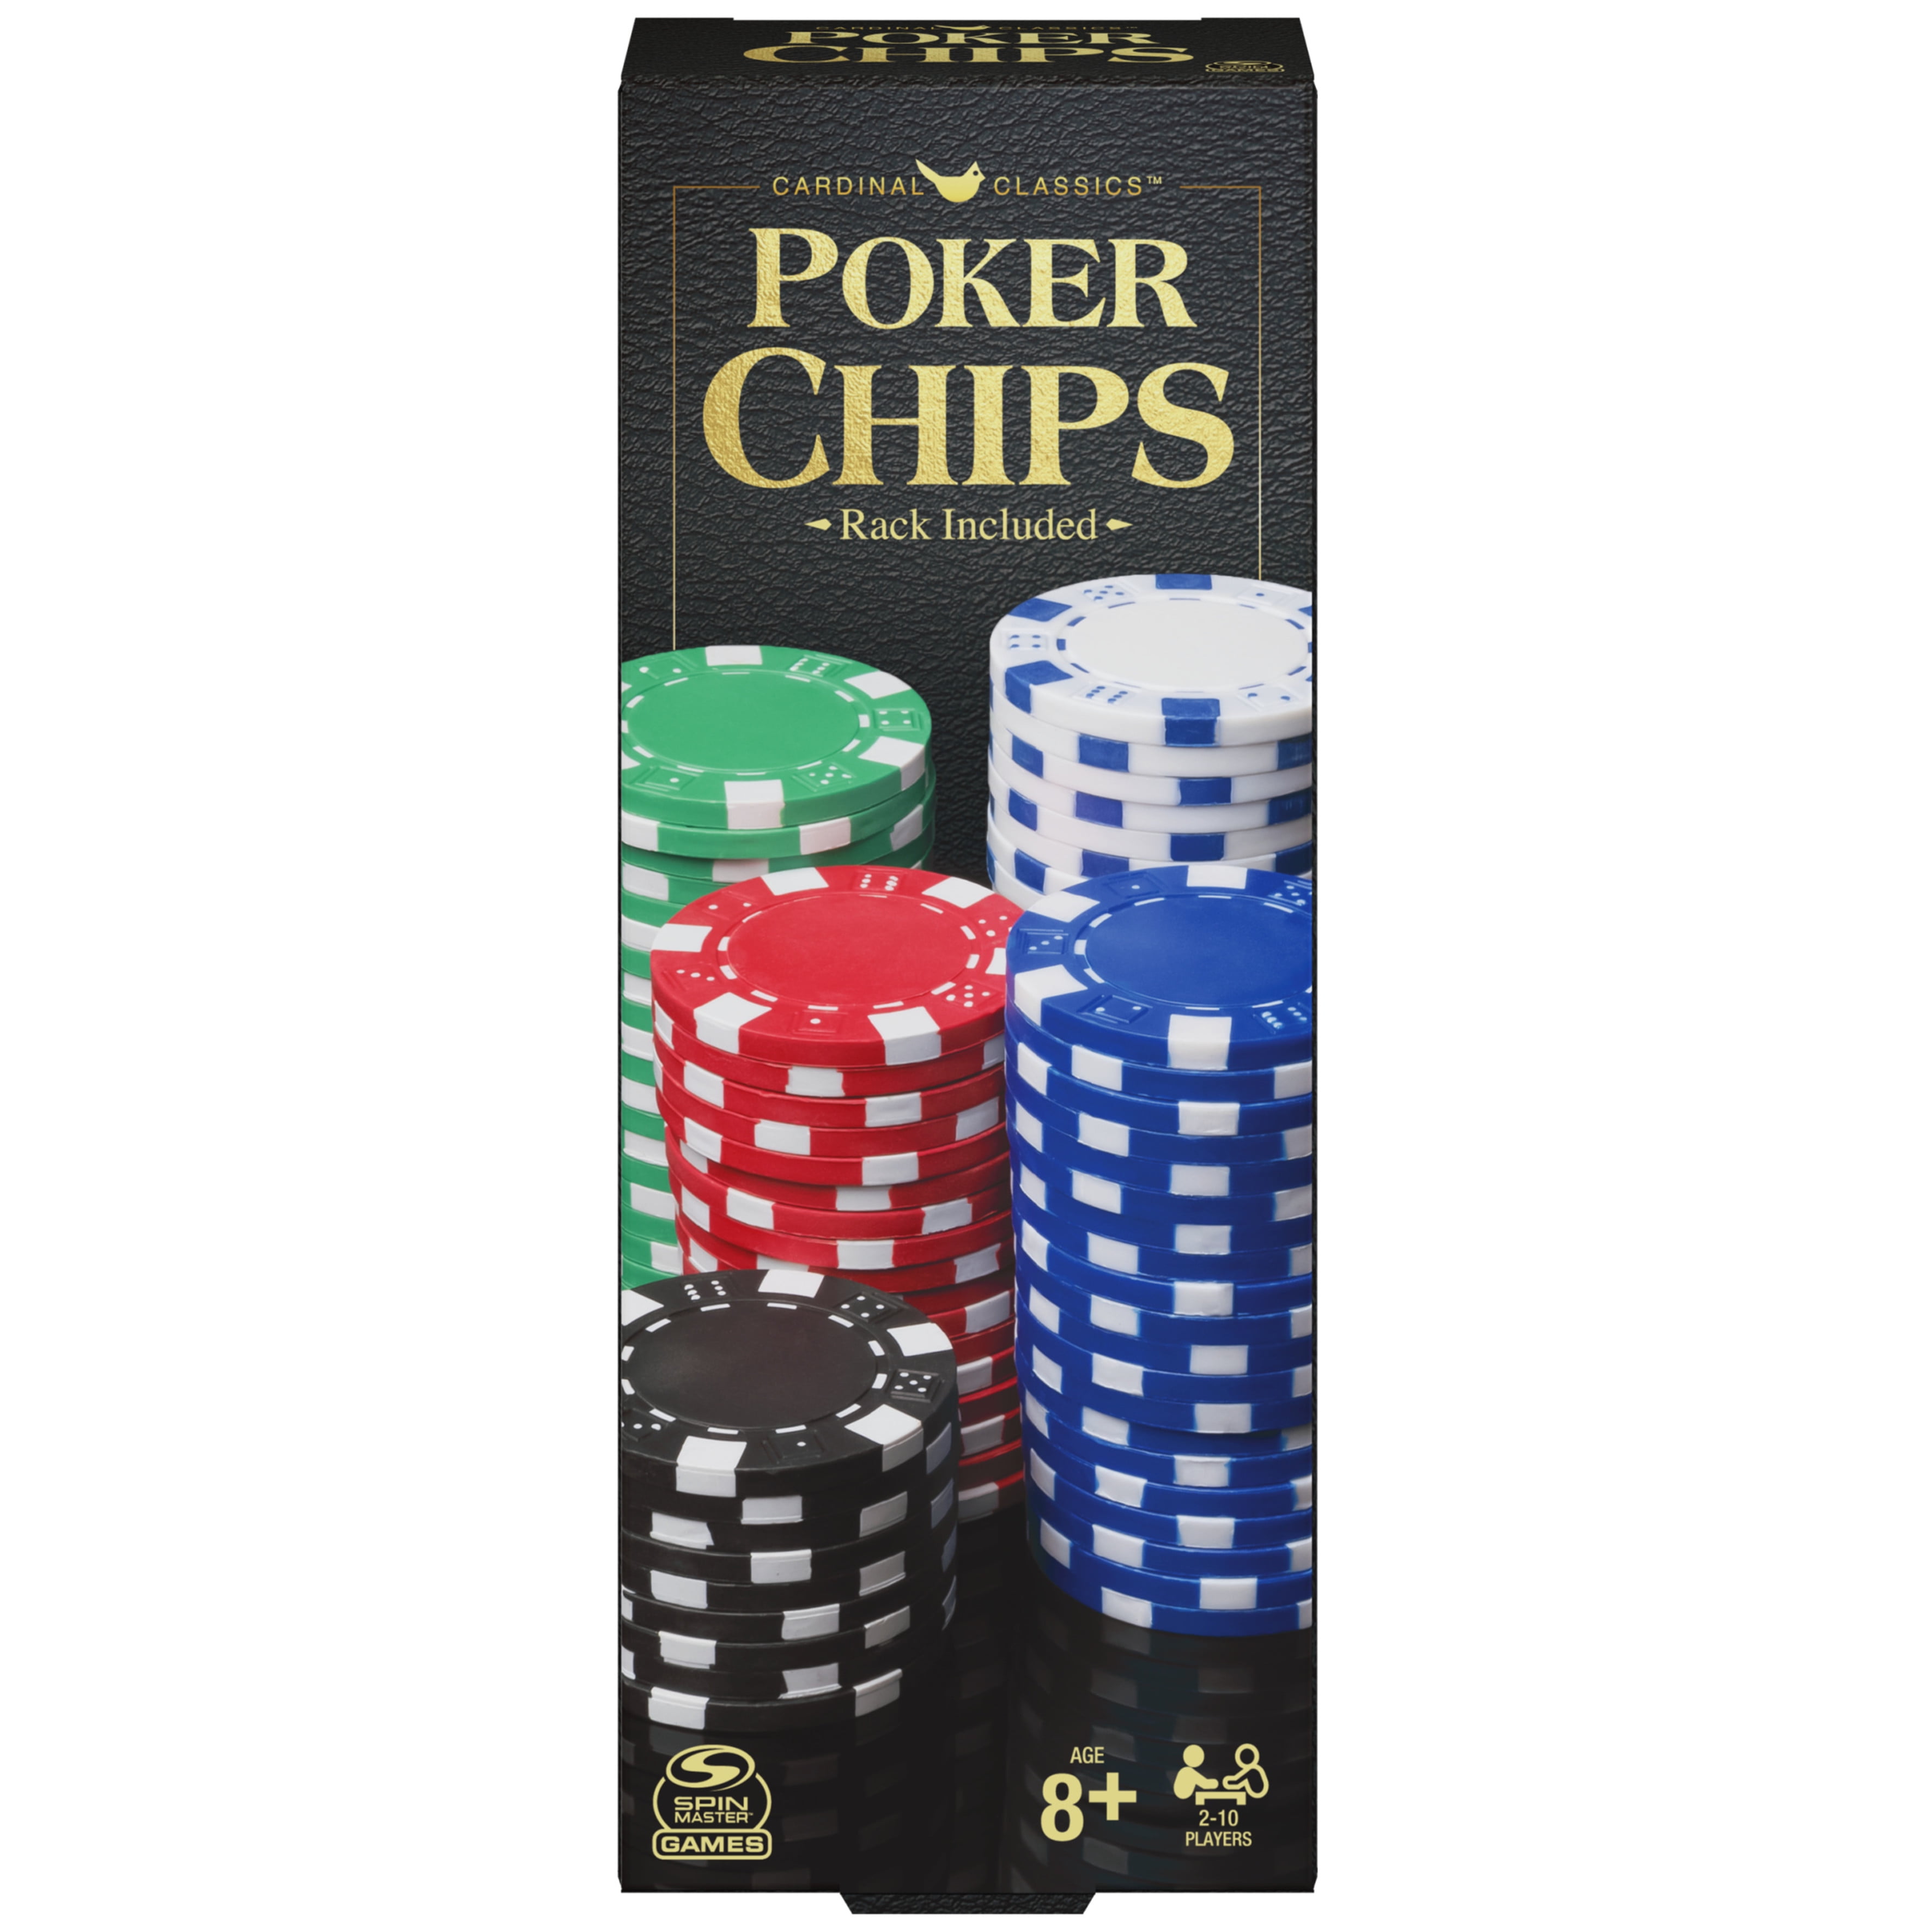 100 pcs/Pack Lot Set of Gold Plating Plastic Pirate Poker Casino S Dollar Chips 